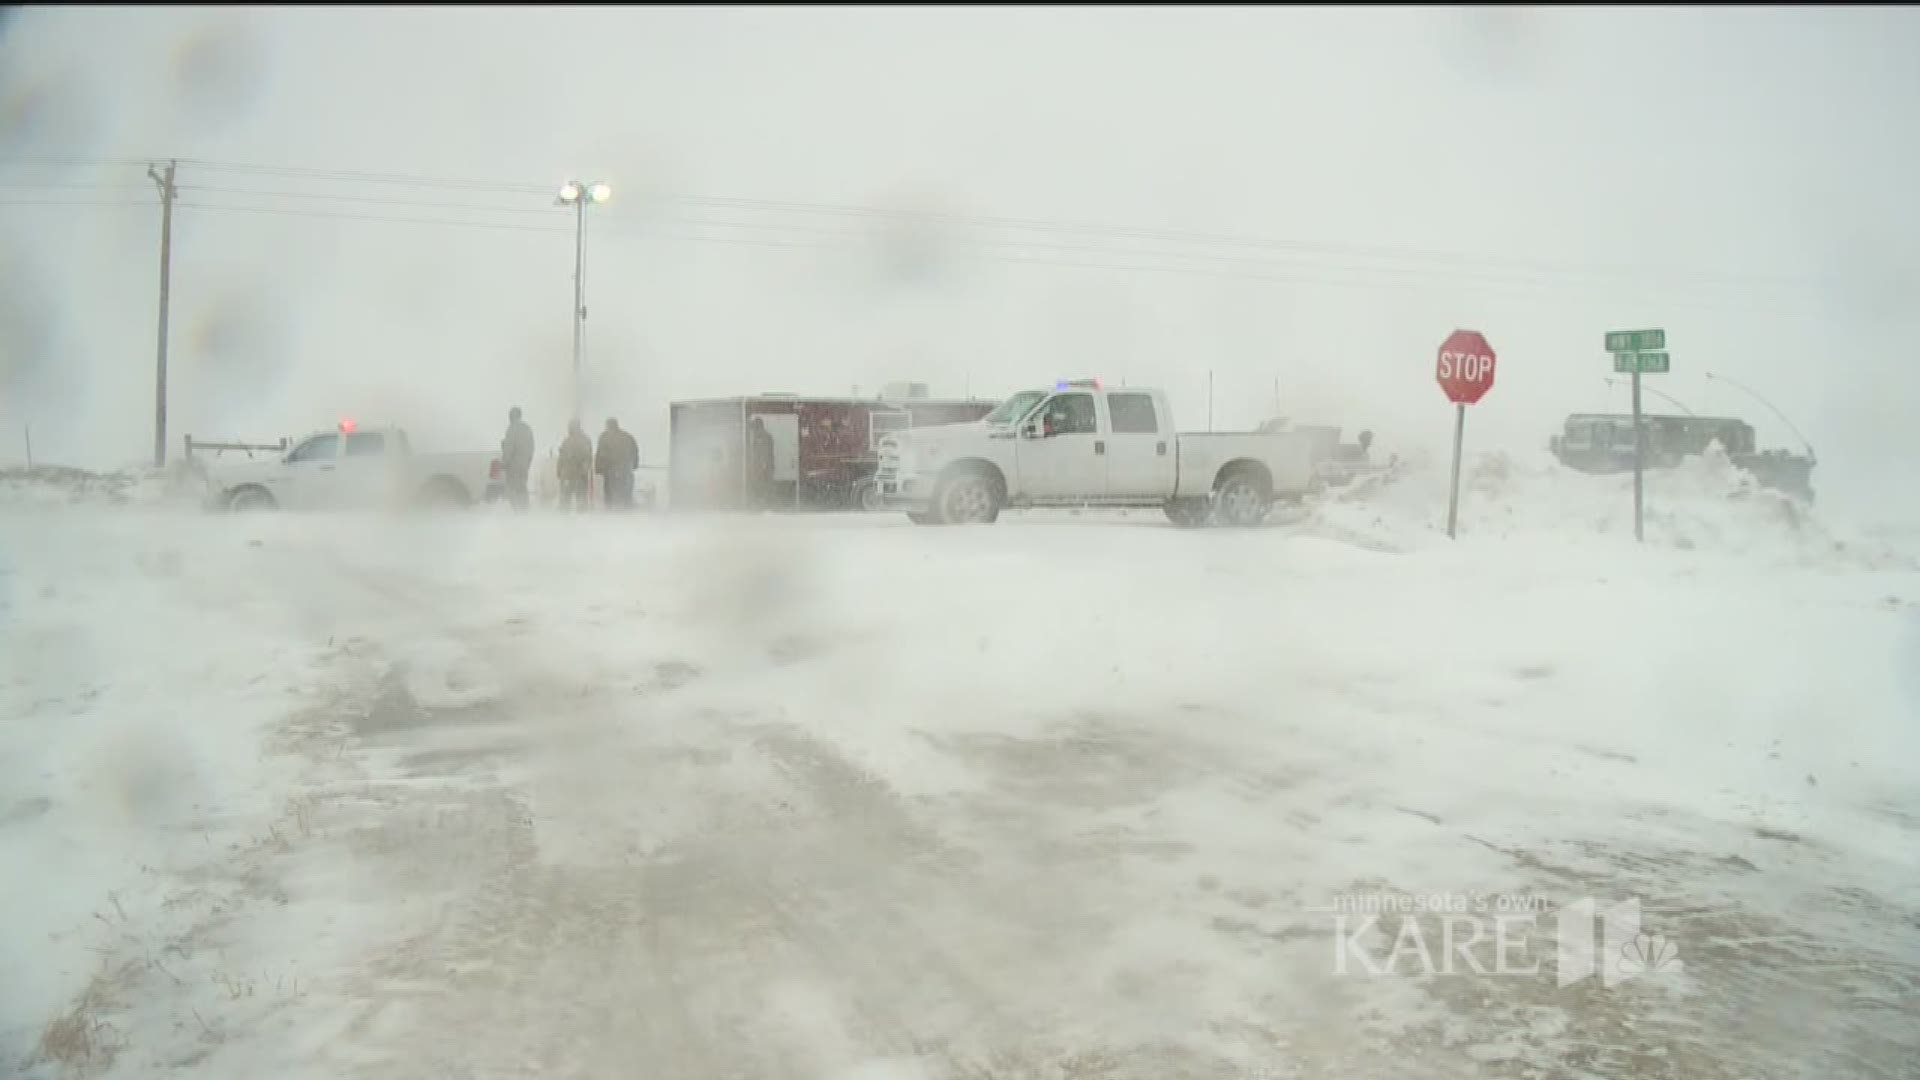 Pipeline protesters brave the blizzard